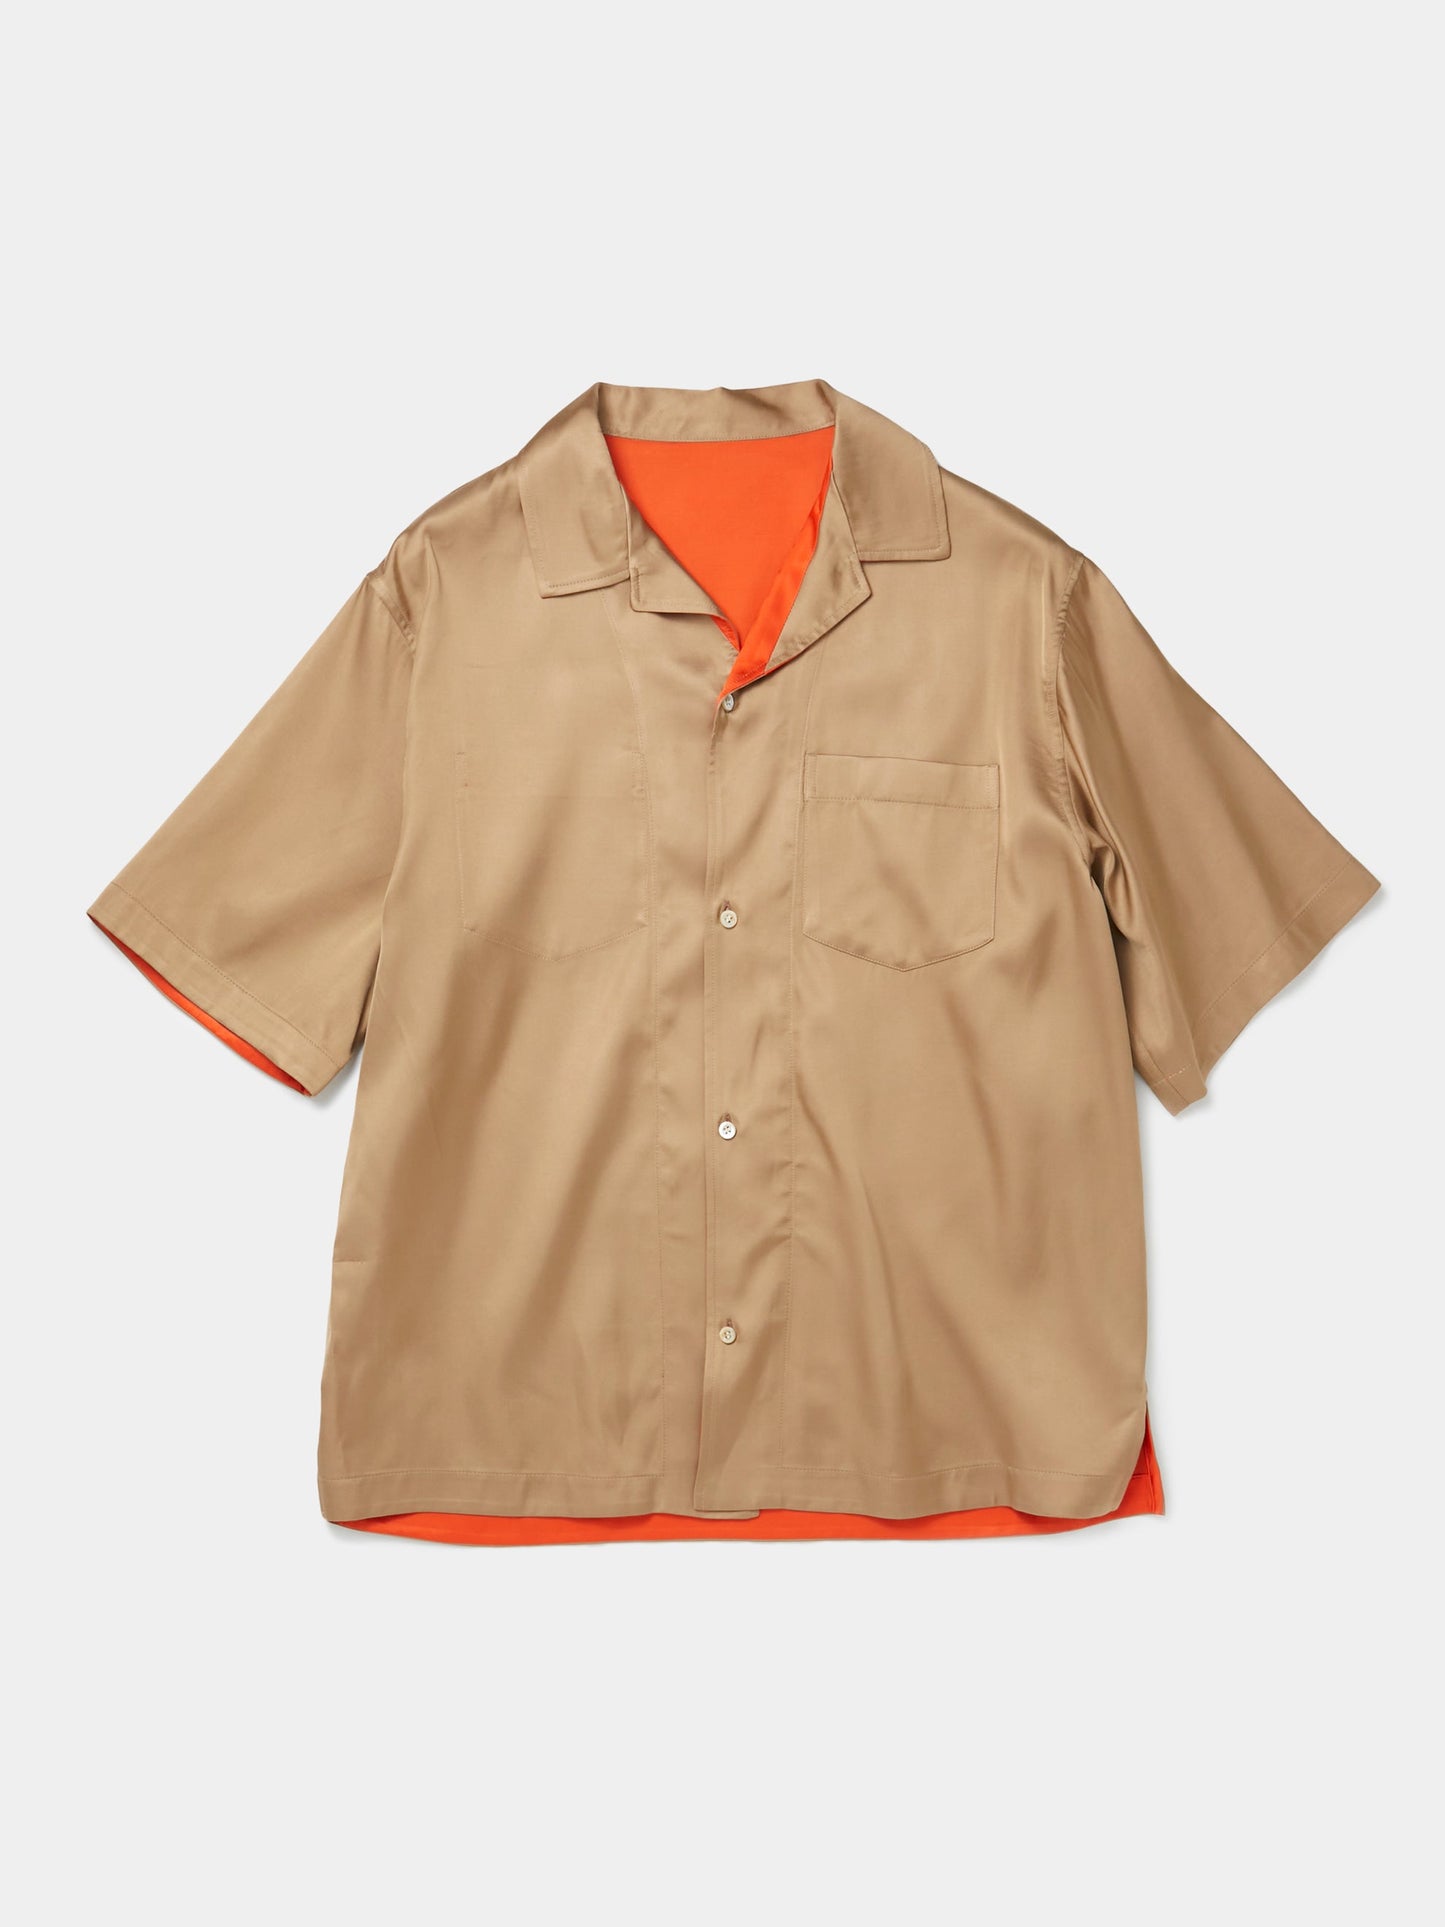 Reversible Camo Shirt (Khaki/Orange)